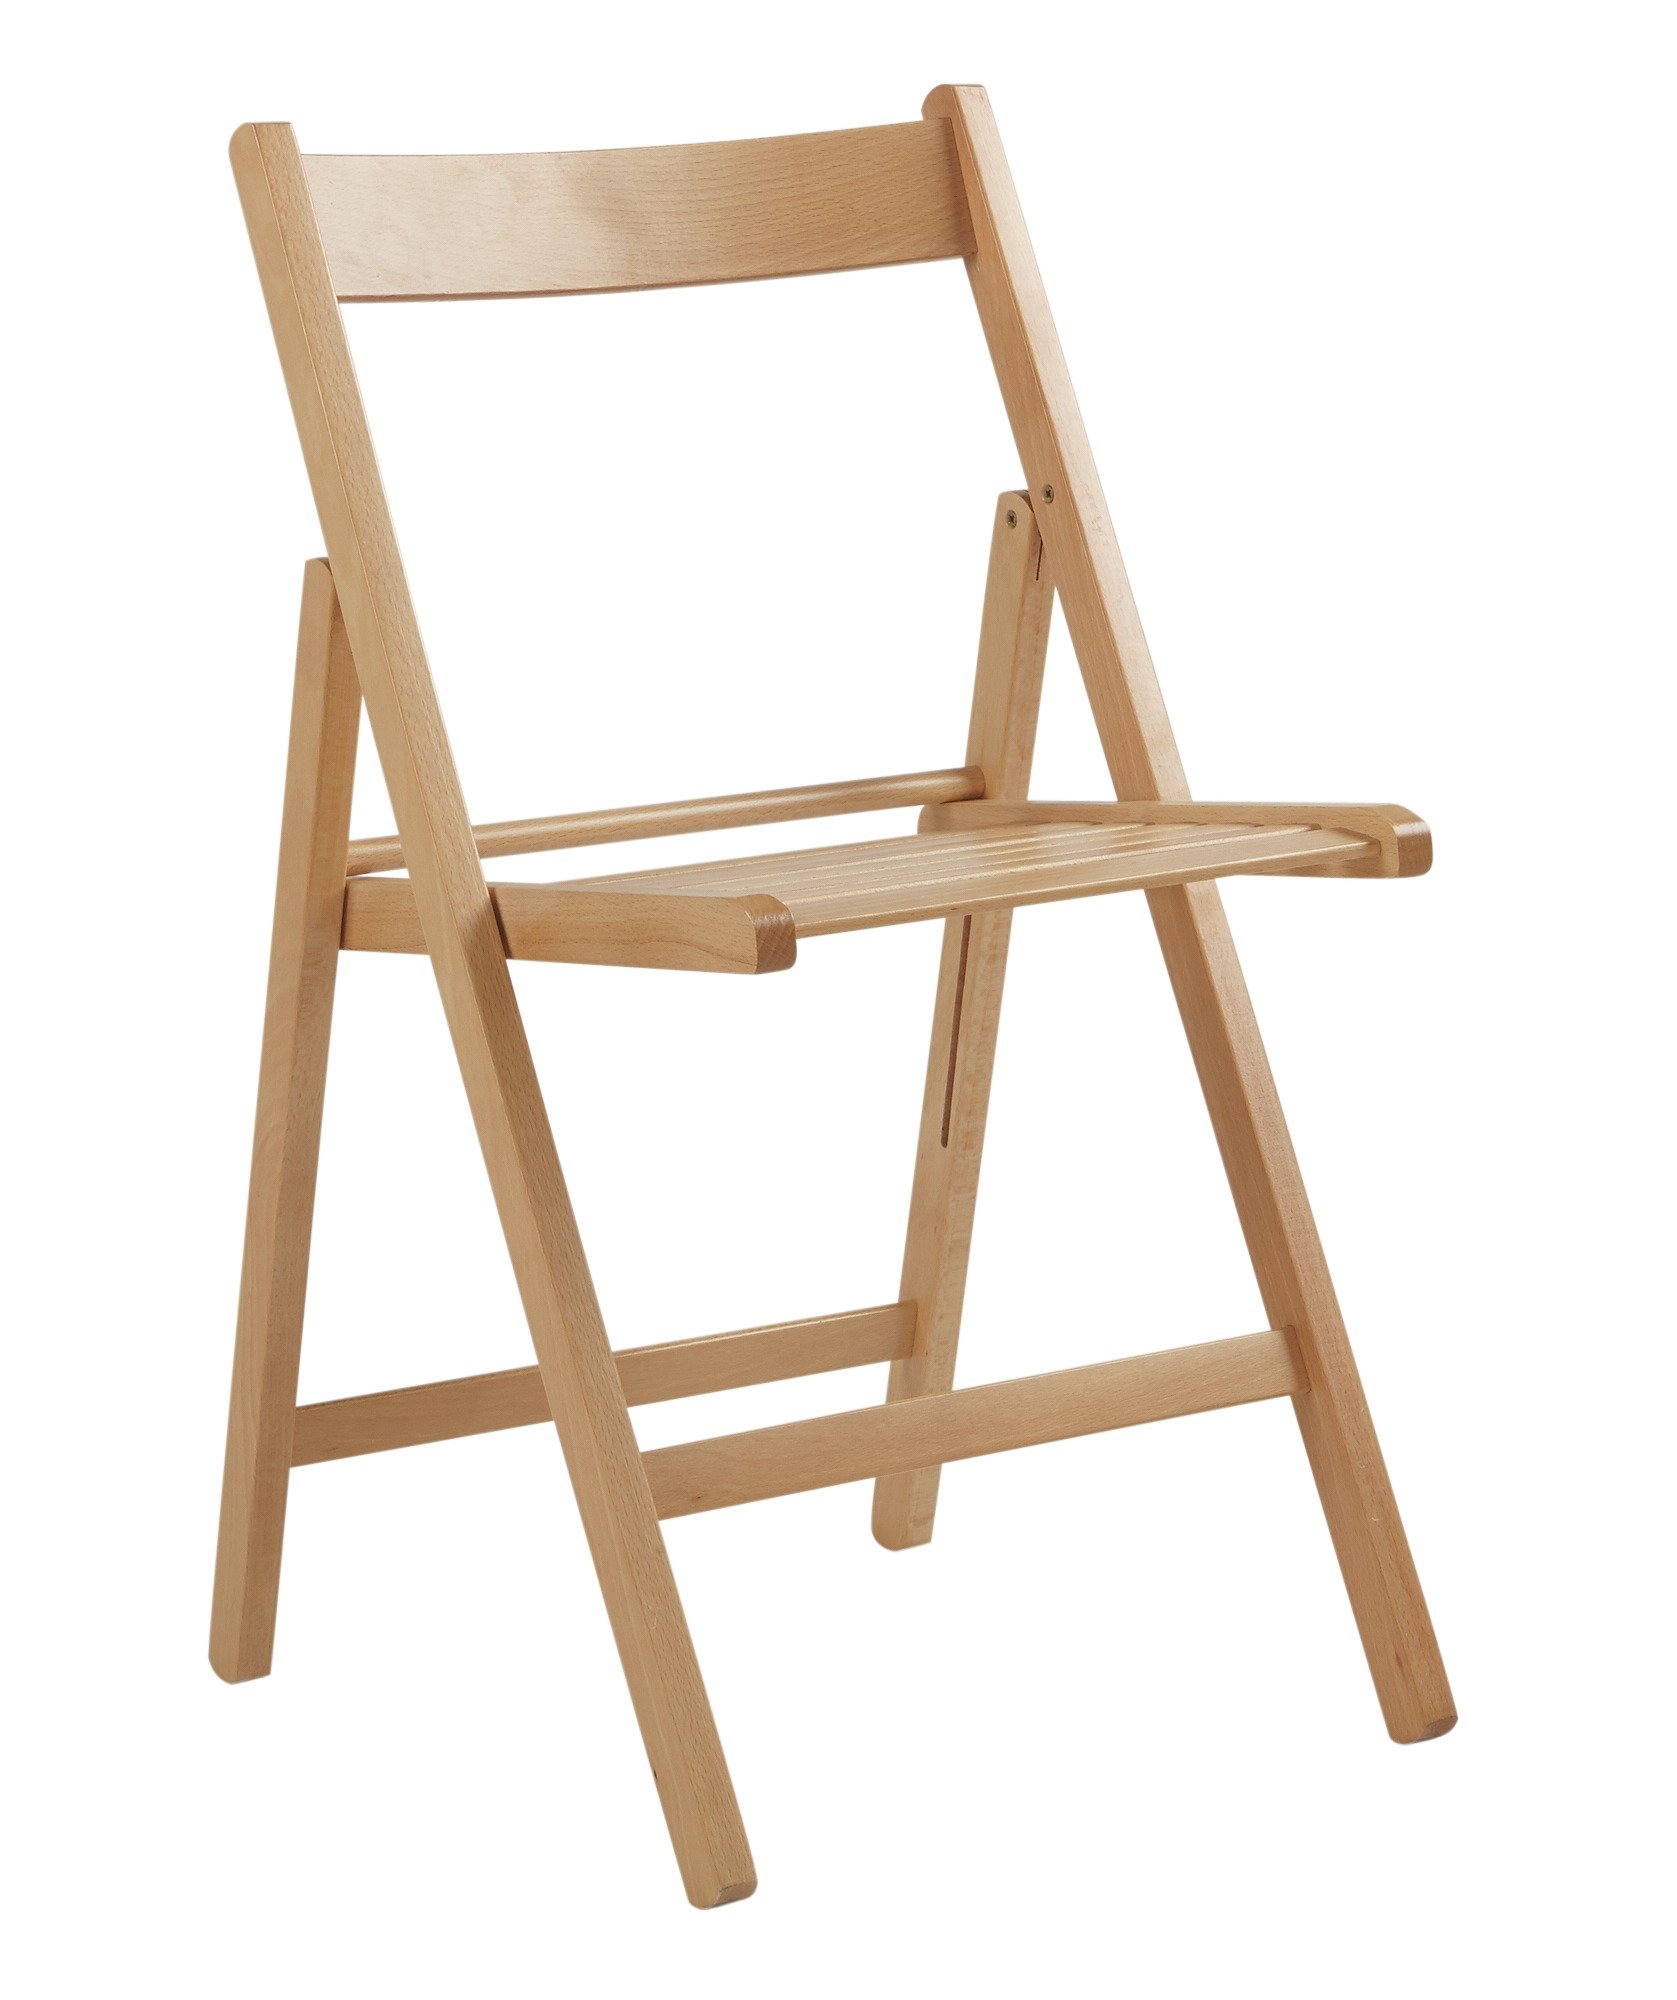 Habitat Wooden Folding Chair - Light Wood